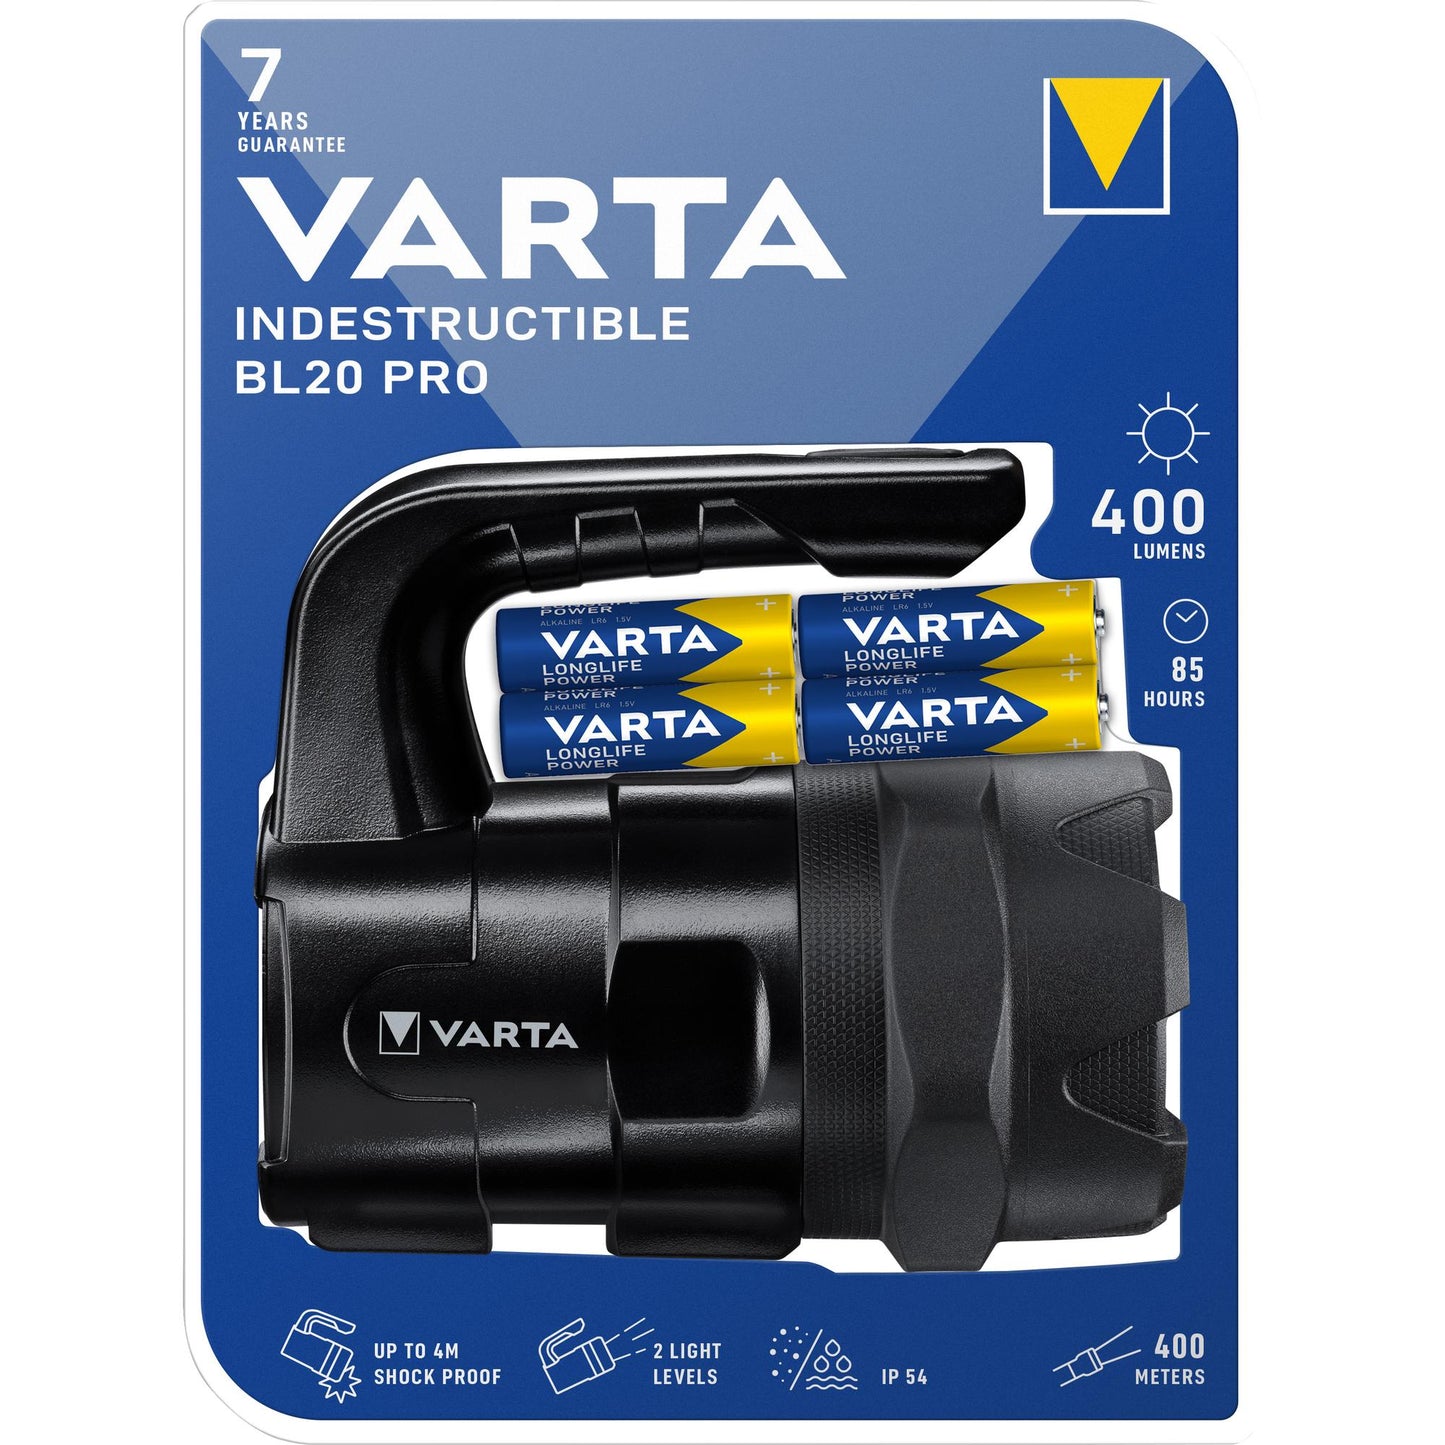 VARTA Indestructible BL20 Pro LED Taschenlampe - 400lm inkl. 6x AA Alkaline Batterie Retail Blister